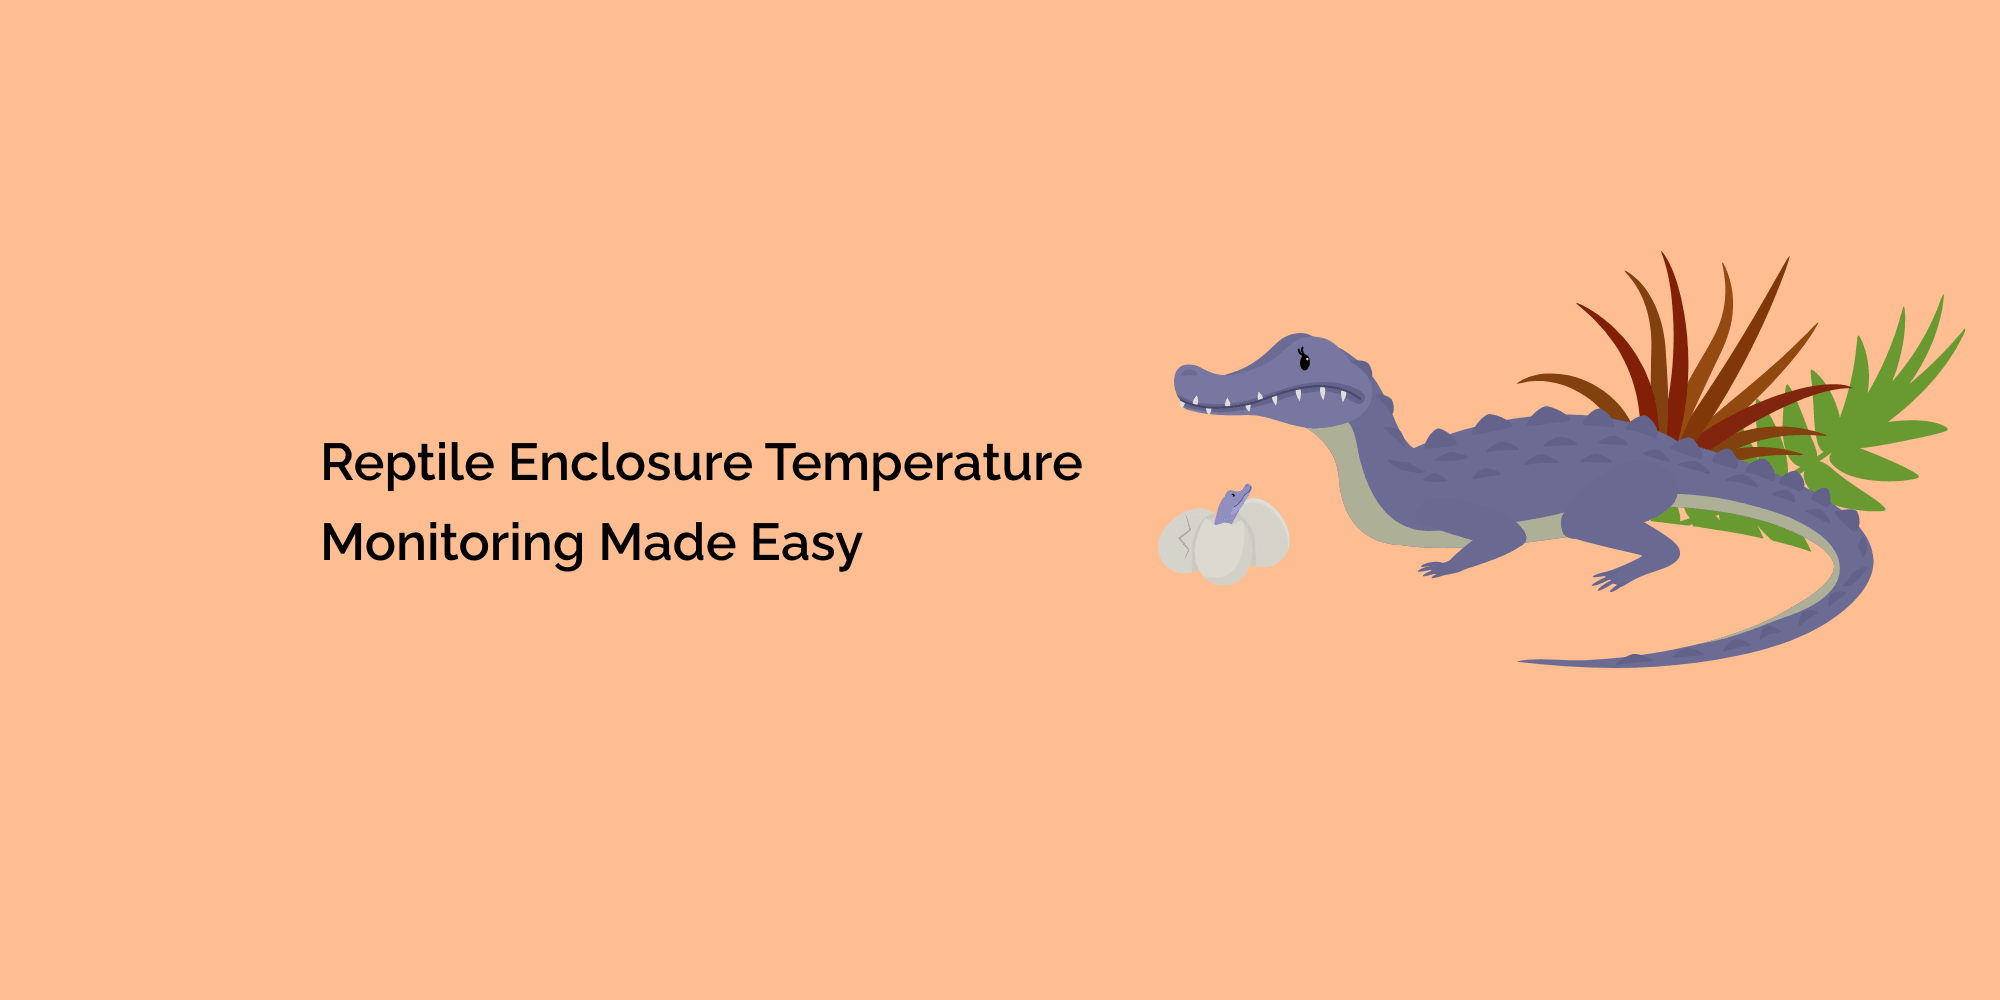 Reptile Enclosure Temperature Monitoring Made Easy